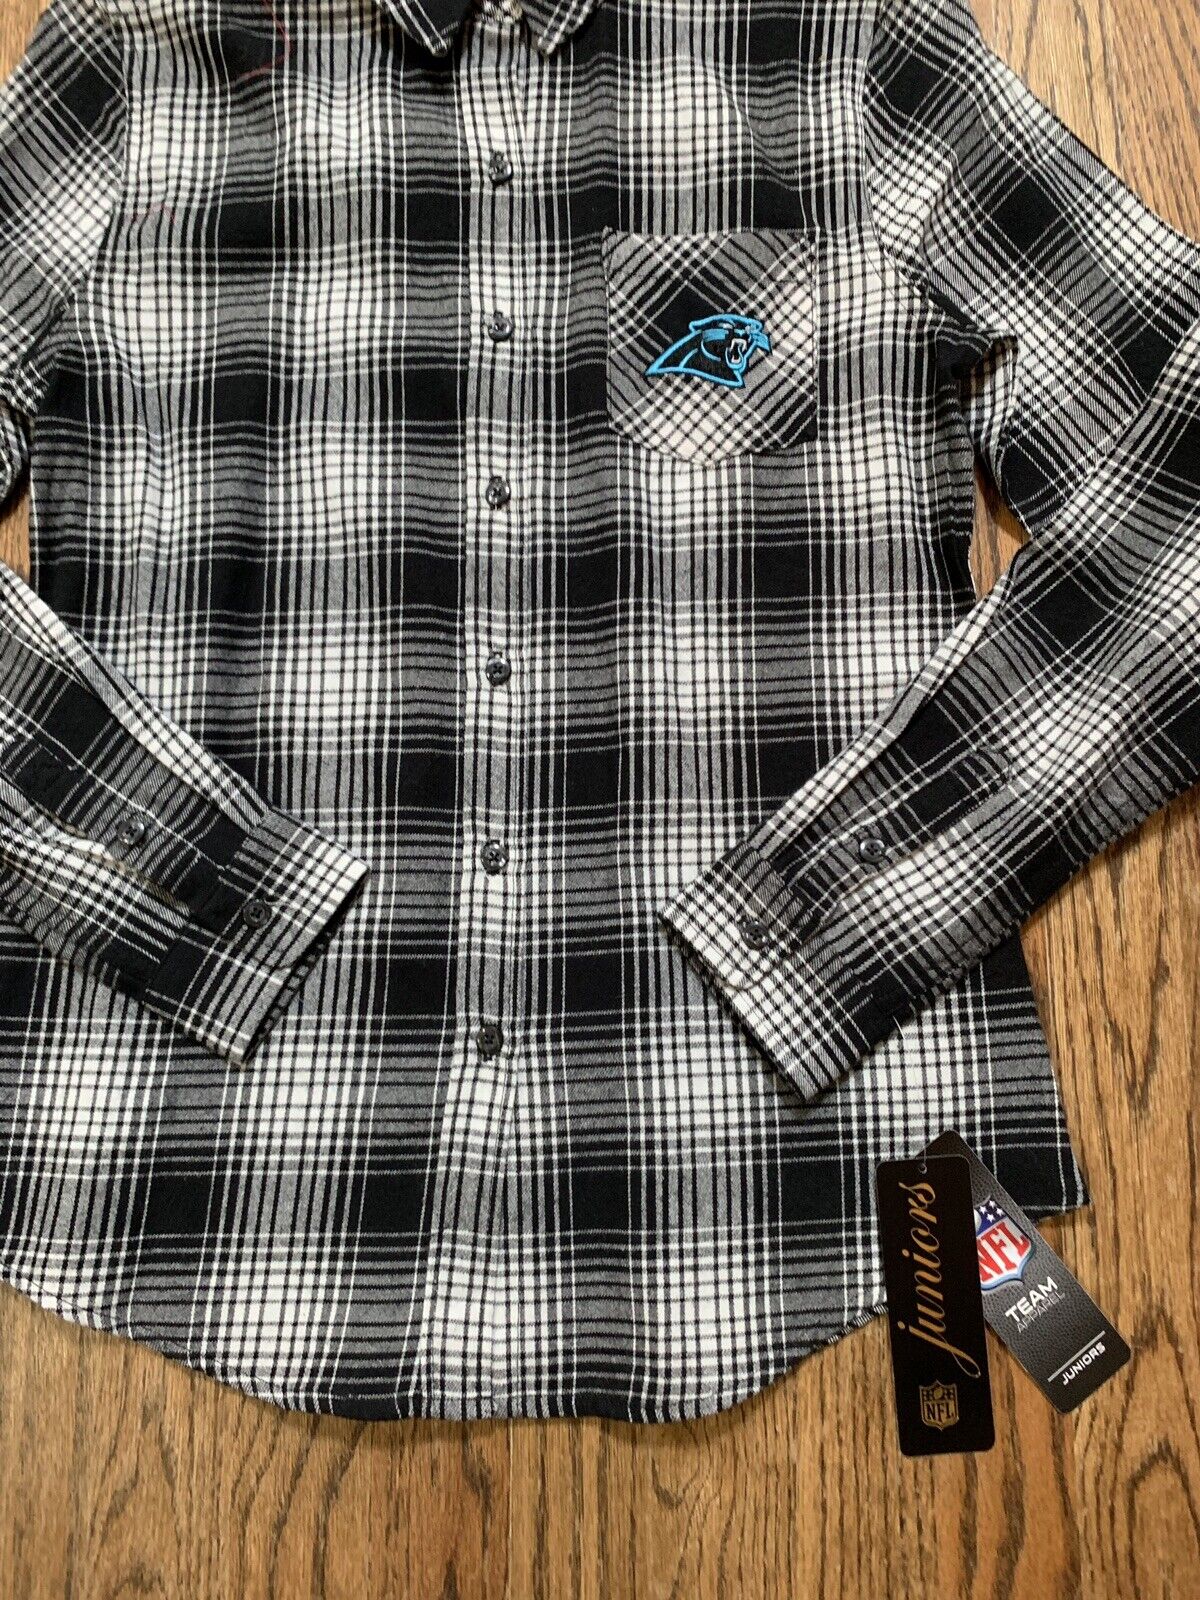 carolina panthers flannel shirt